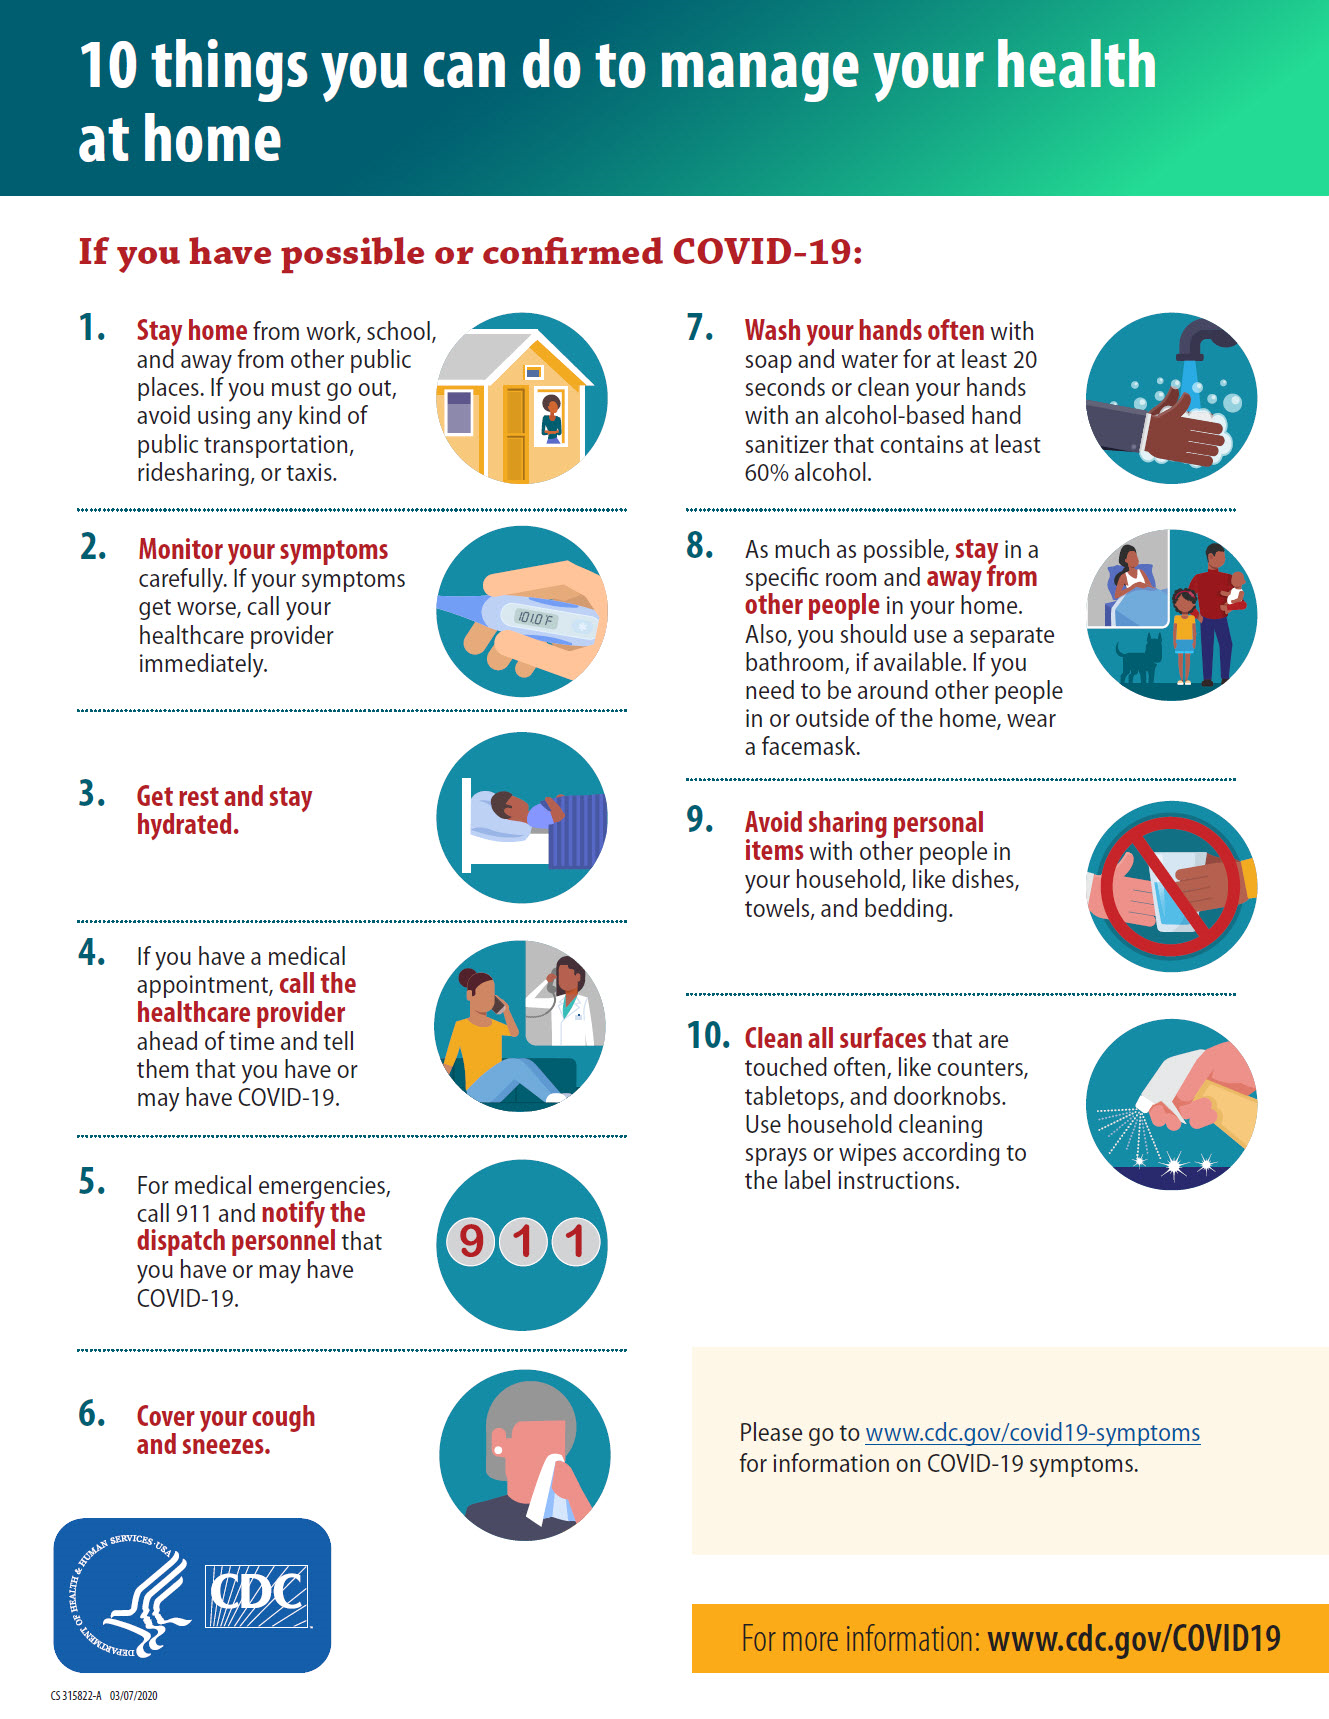 Managing COVID-19 Symptoms at Home